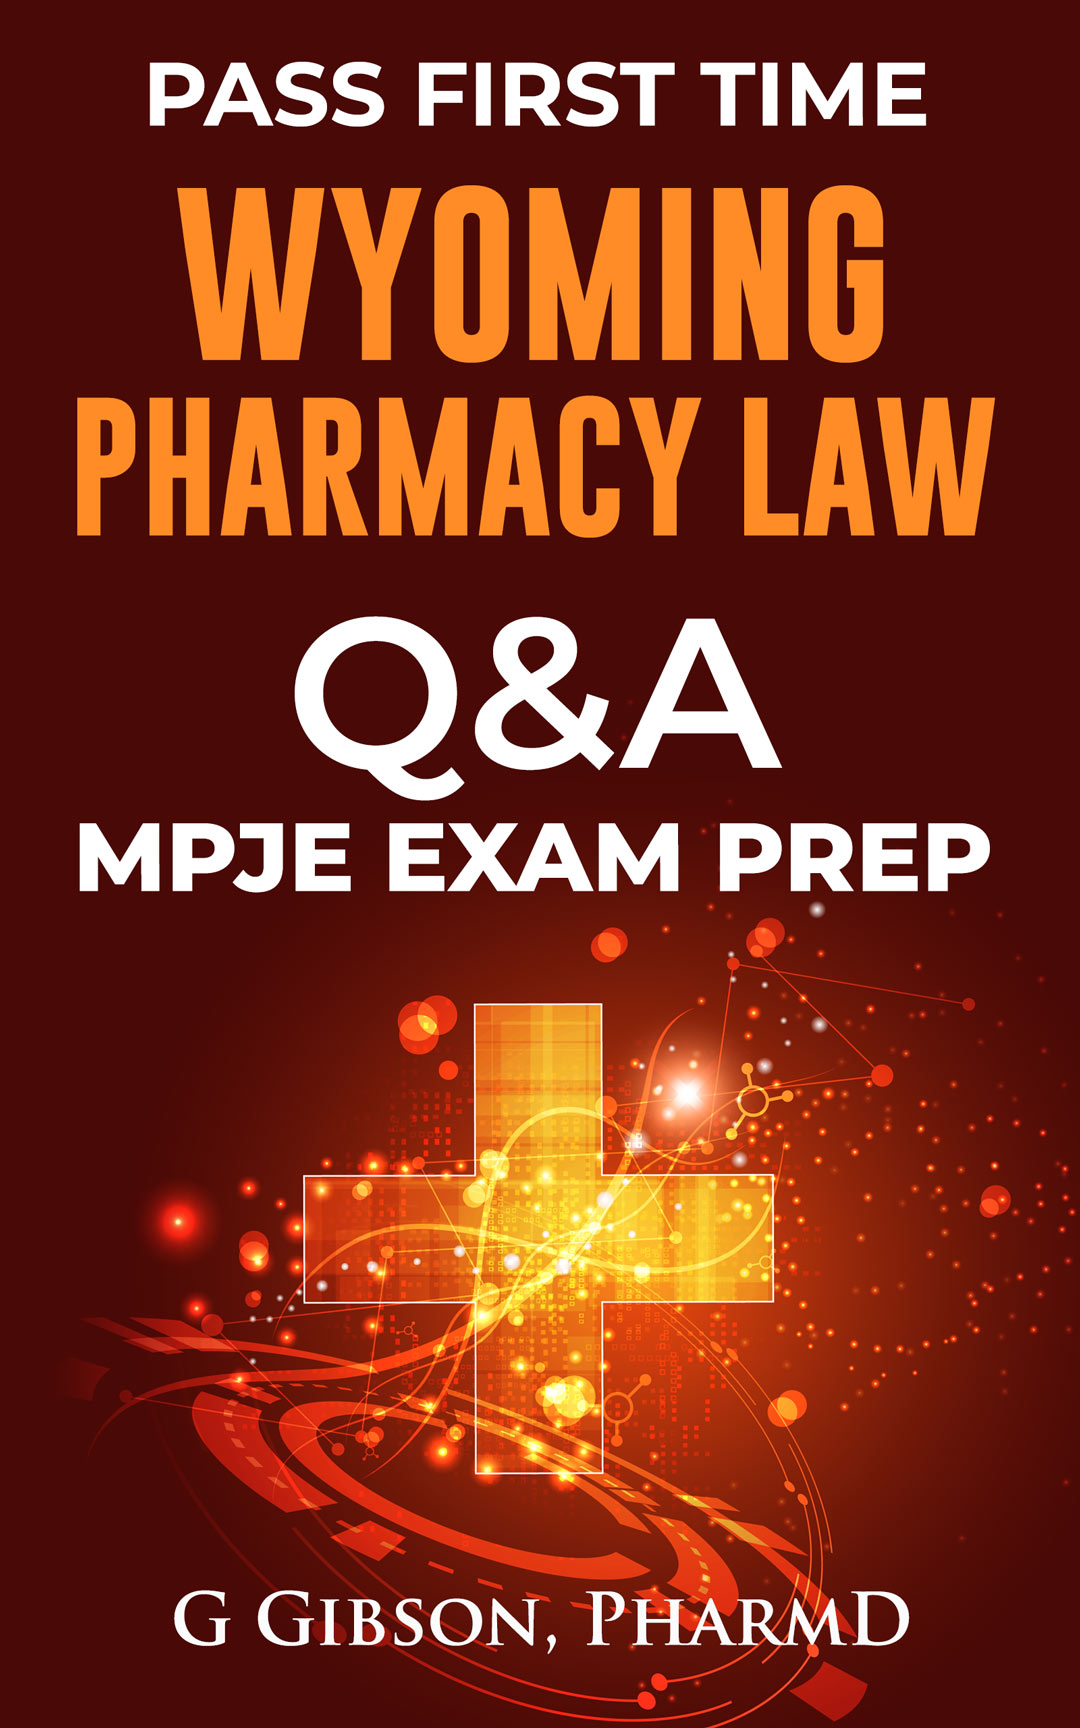 Wyoming Pharmacy Law MPJE Exam Prep Q & A